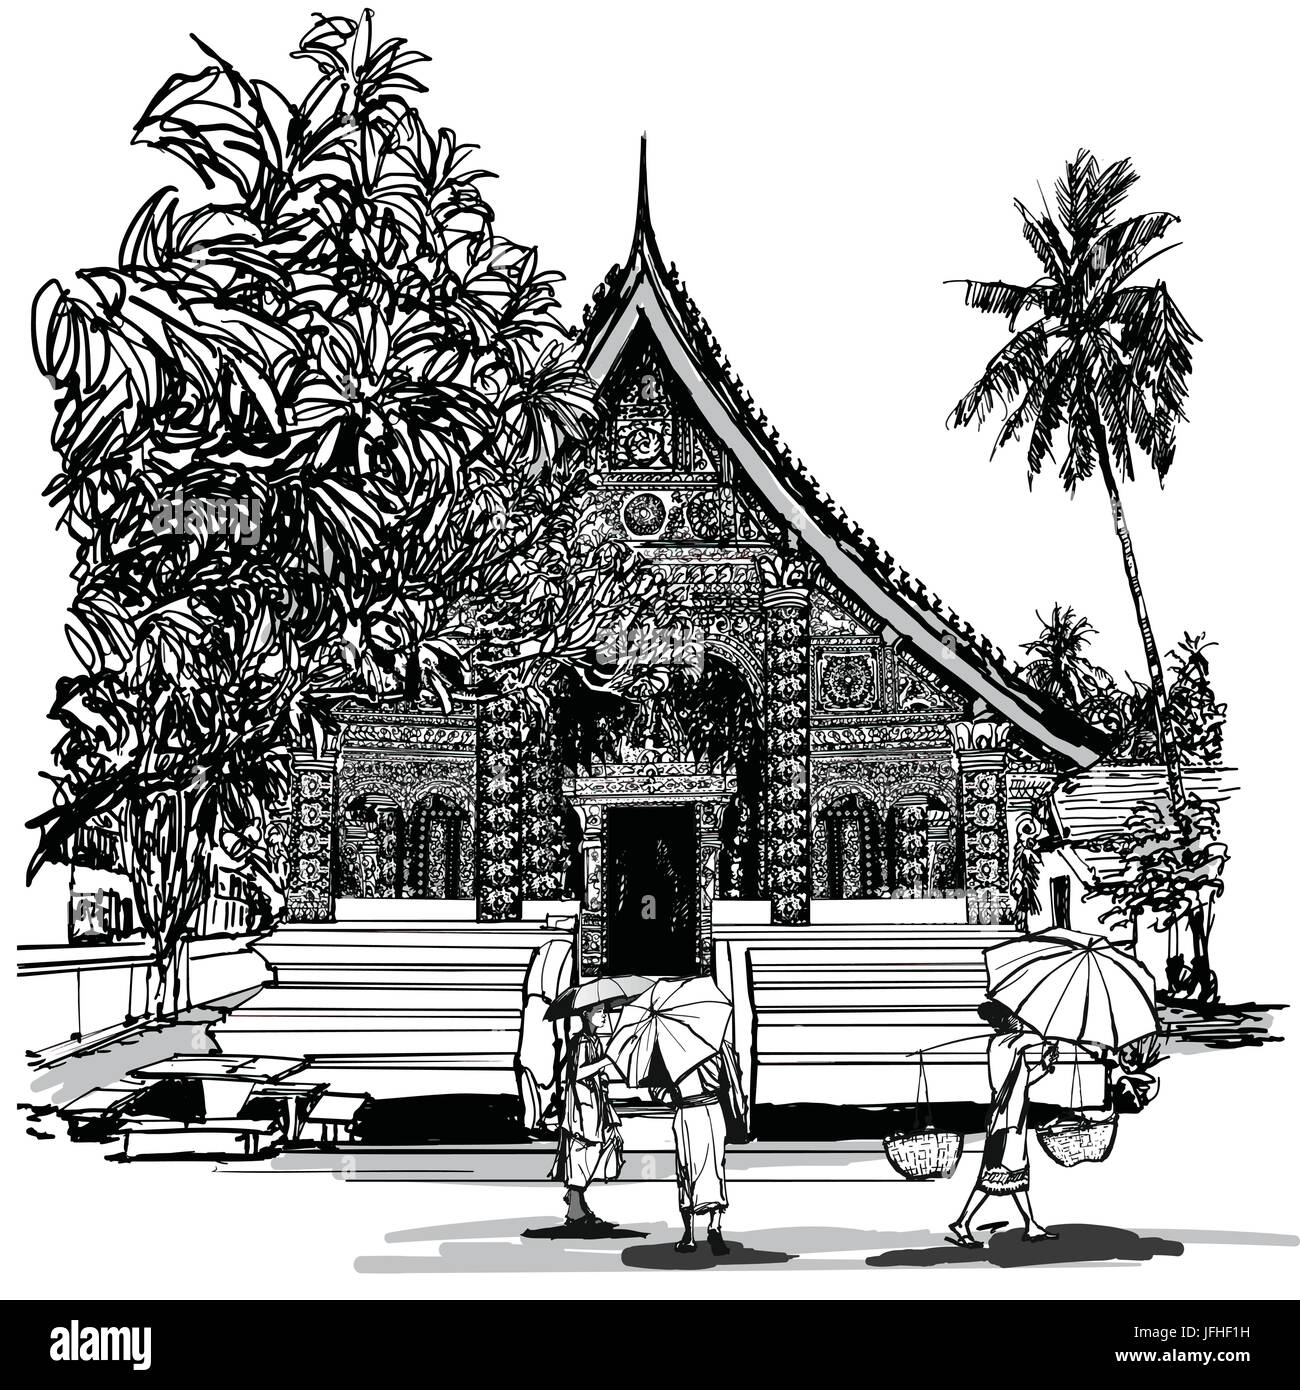 Buddhistischer Tempel in Asien mit Mönchen - Vektor-illustration Stock Vektor